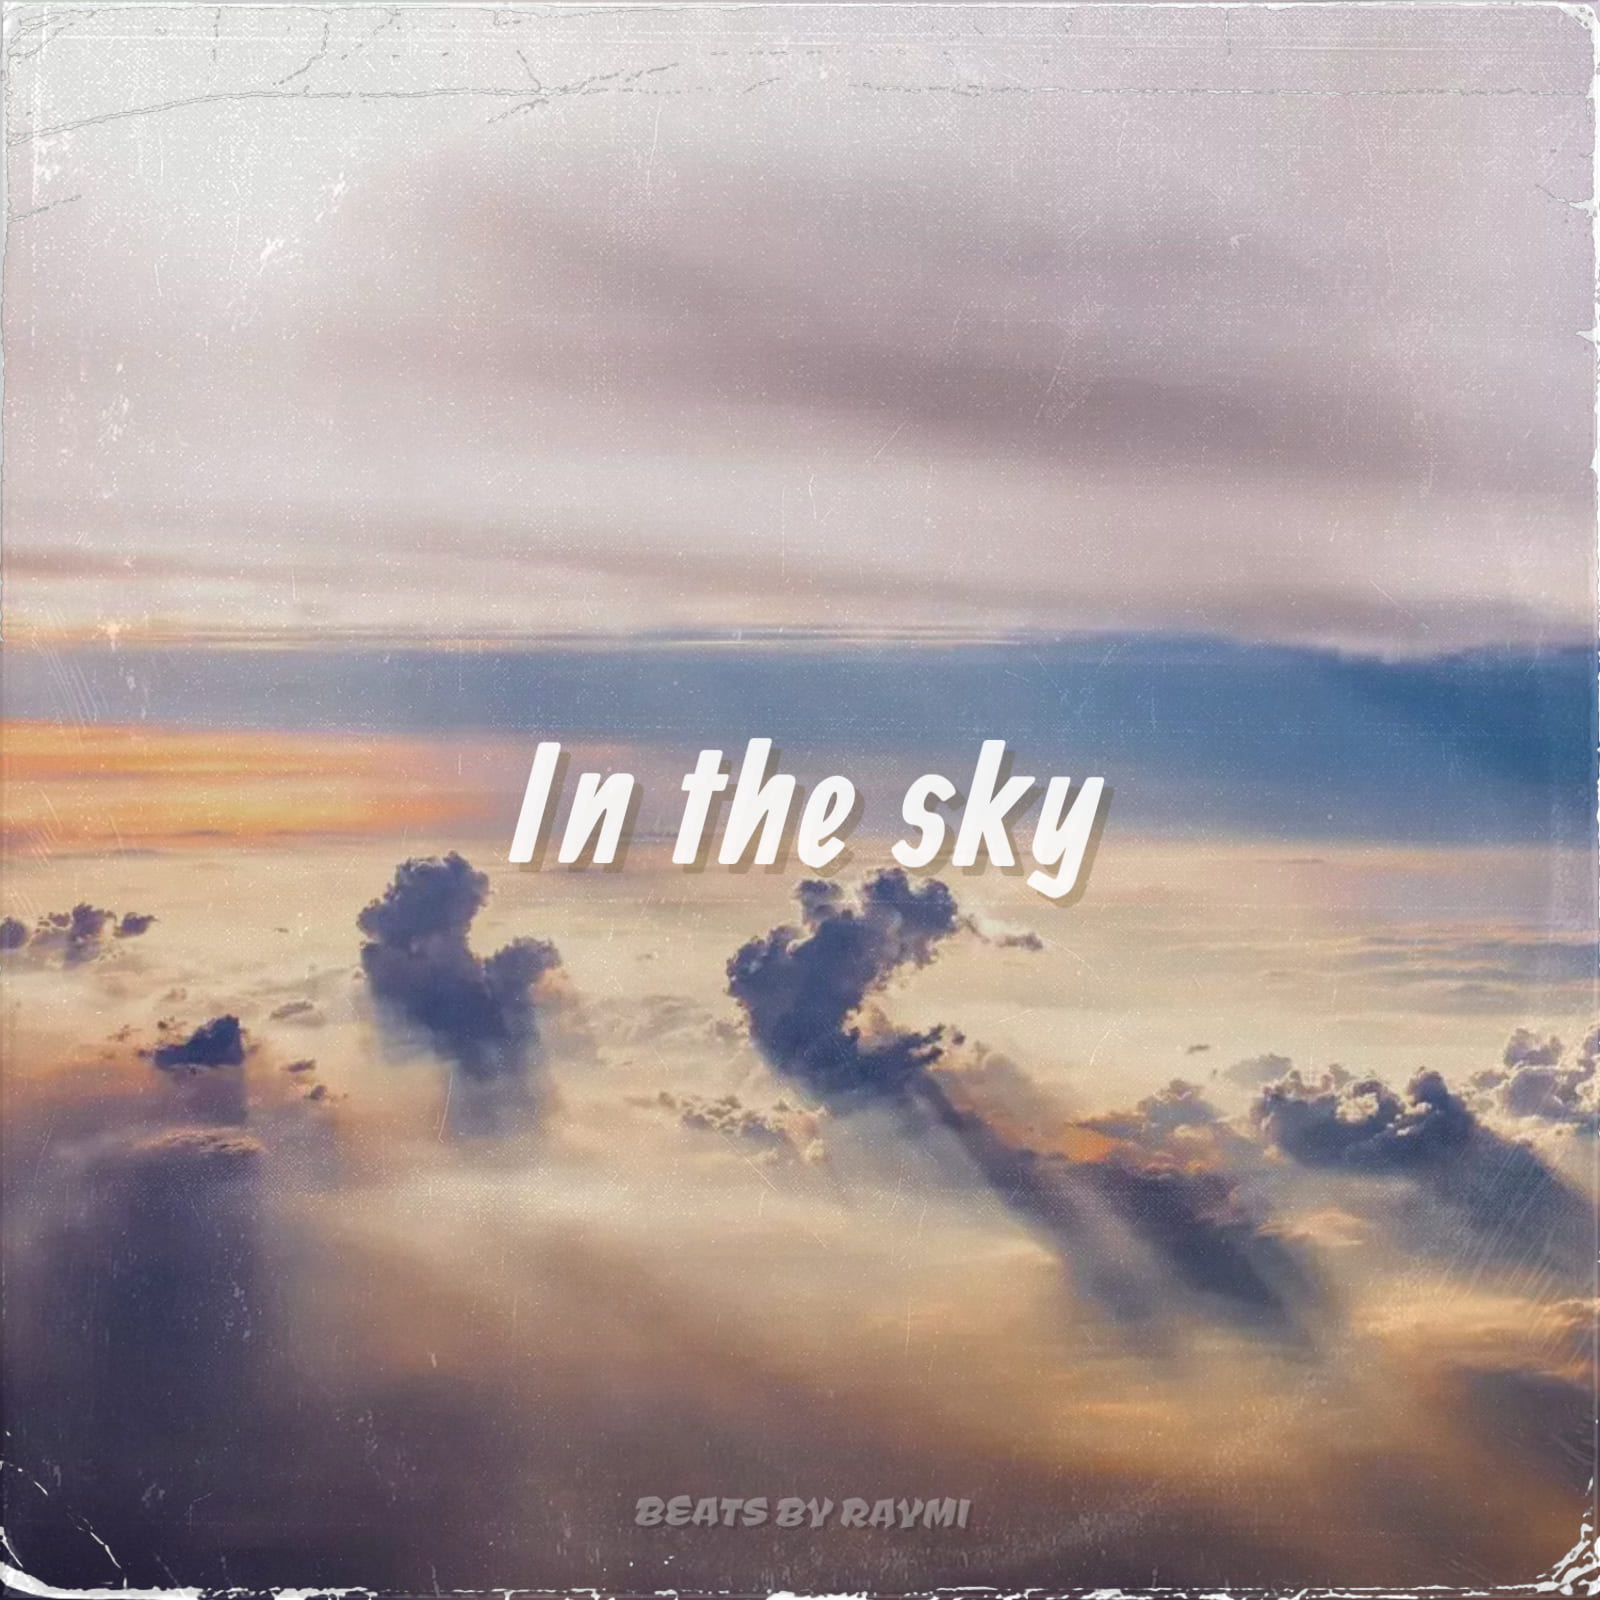 обложка бита, Raymi, музыка, cover, In the sky (энергичный, позитивный бит)